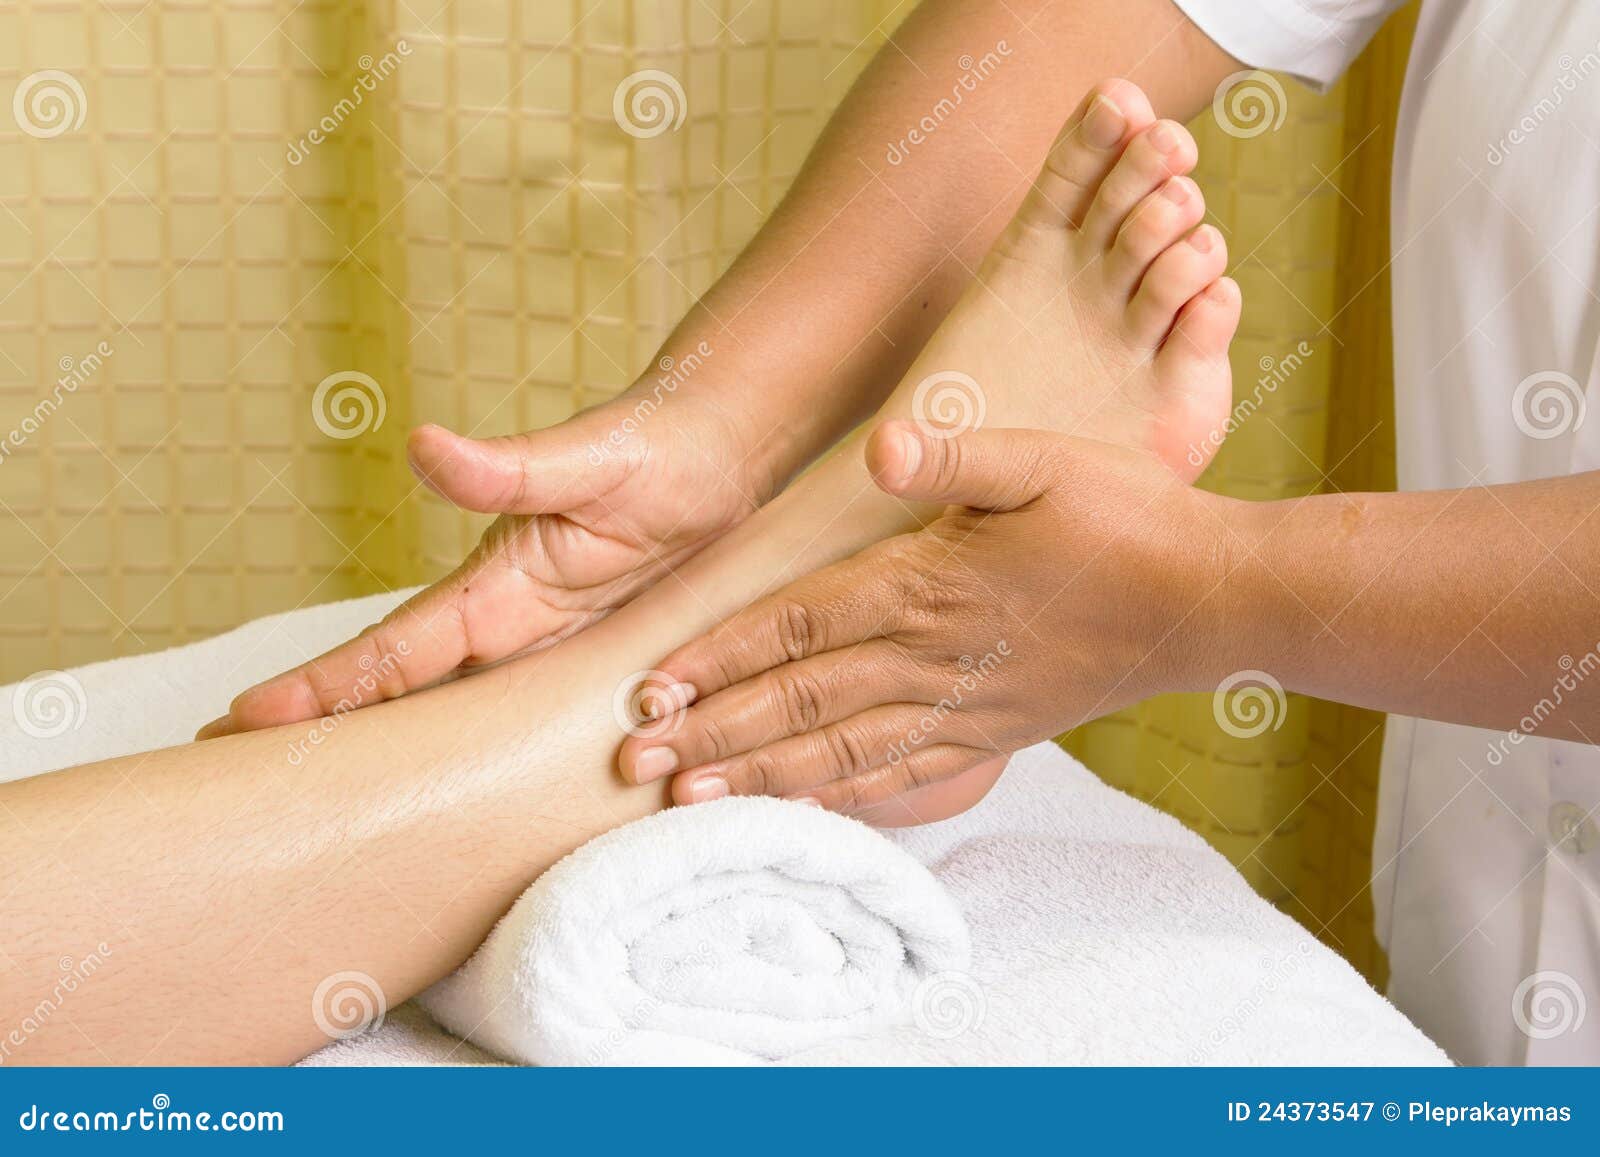 Foot Massage Spa Foot Oil Treatment Stock Image Image Of Reflexology